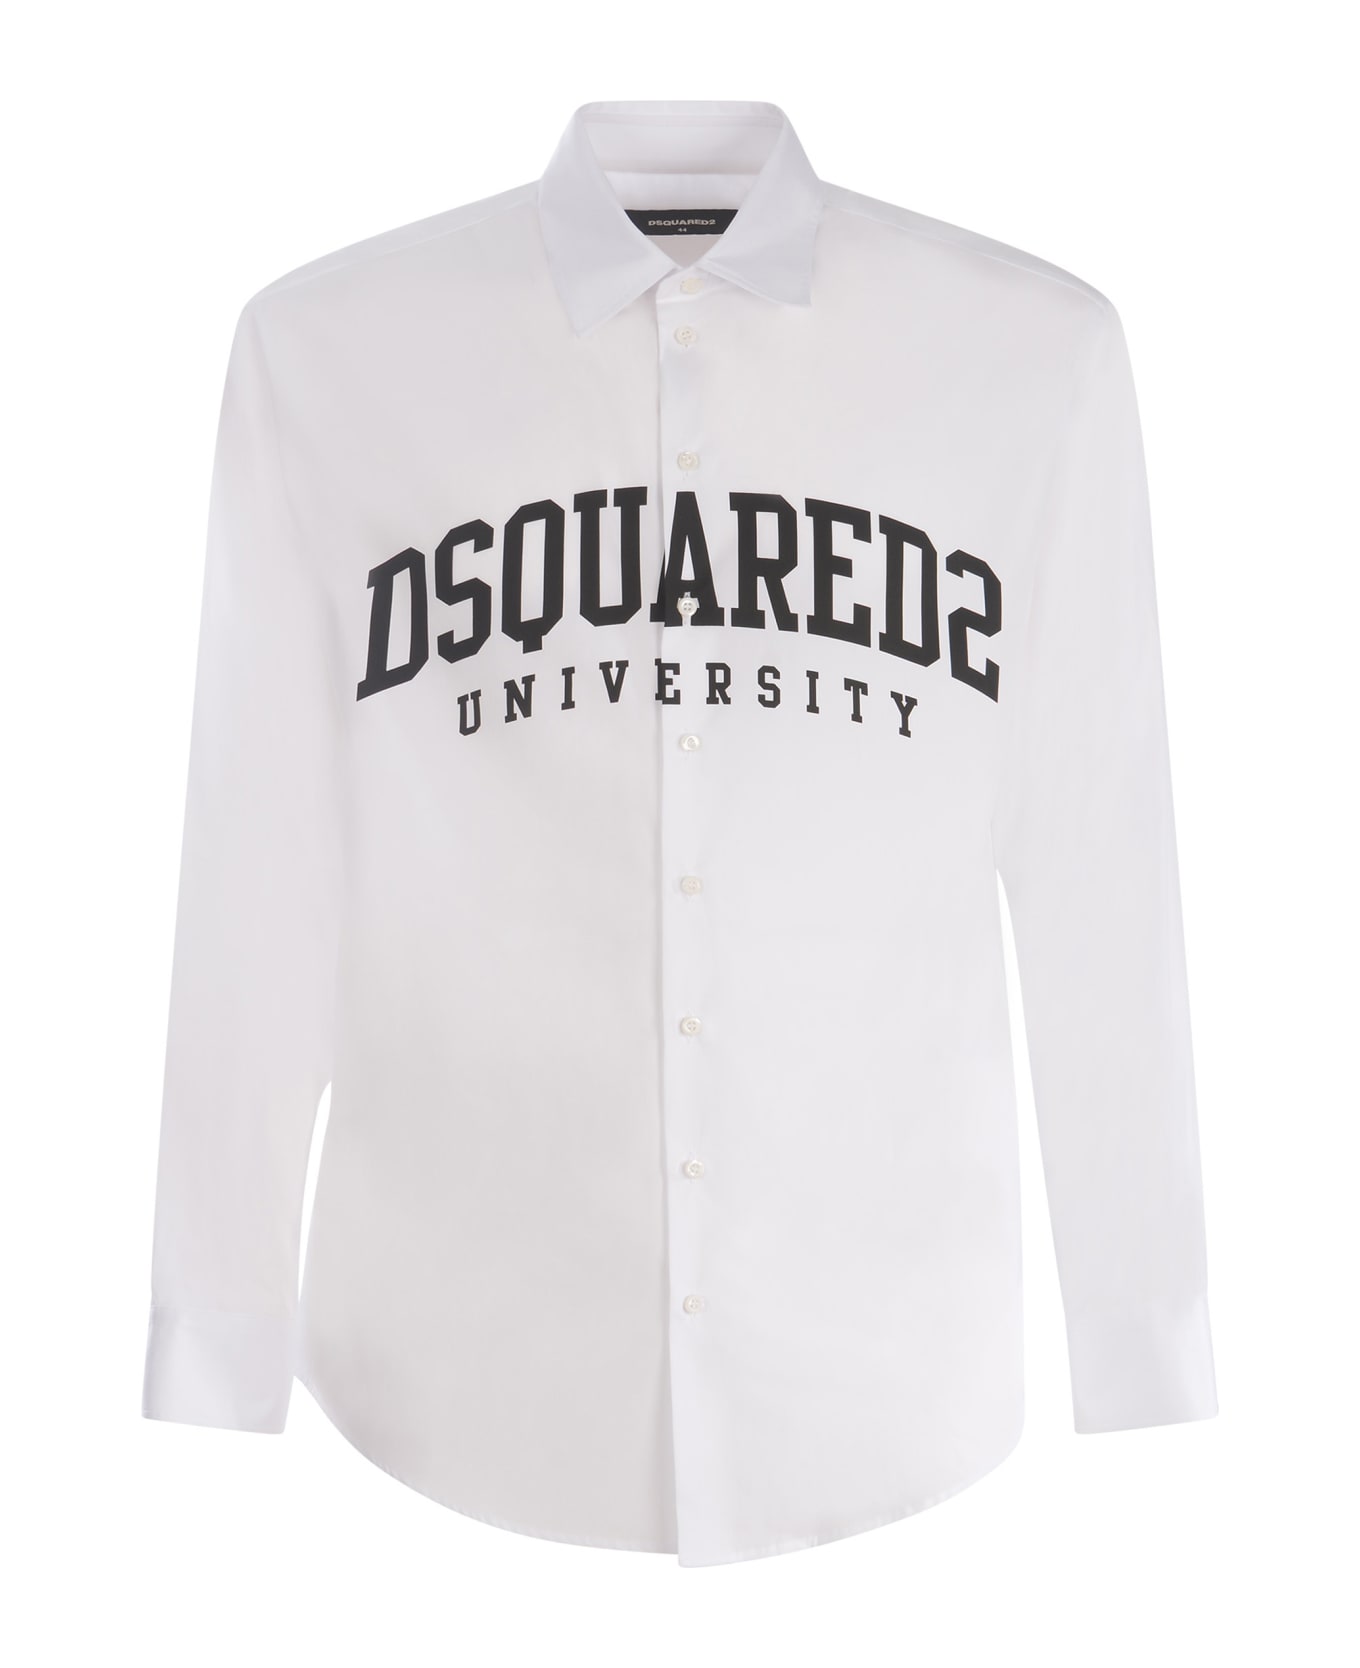 Dsquared2 "university" Shirt - Bianco